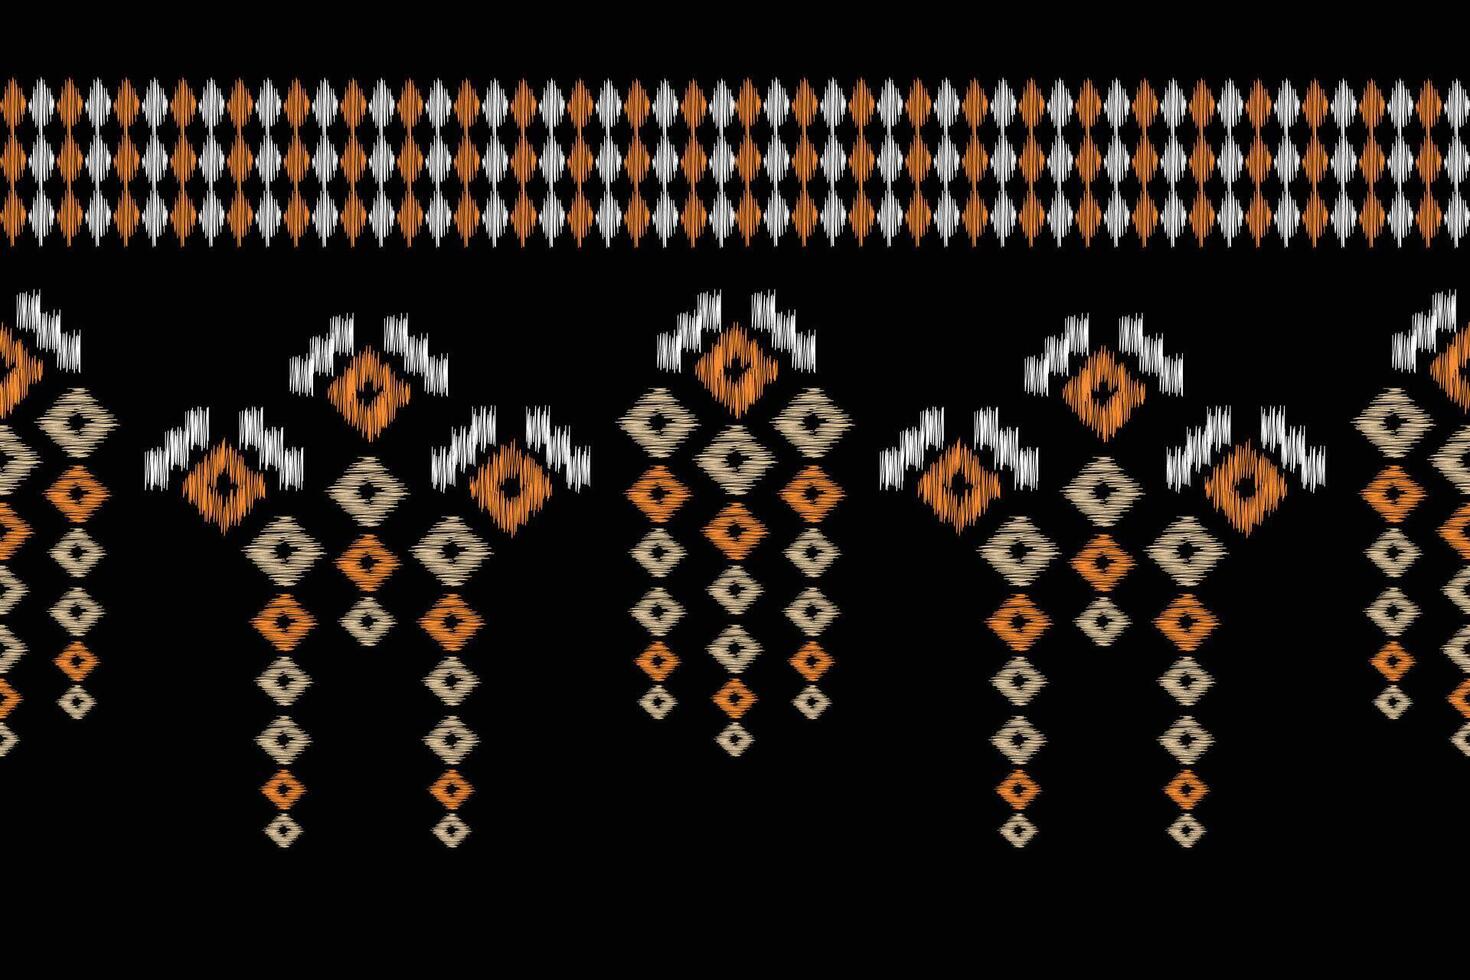 traditionell etnisk ikat motiv tyg mönster geometrisk stil.afrikansk ikat broderi etnisk orientalisk mönster svart bakgrund tapet. abstrakt, vektor, illustration.texture, ram, dekoration. vektor